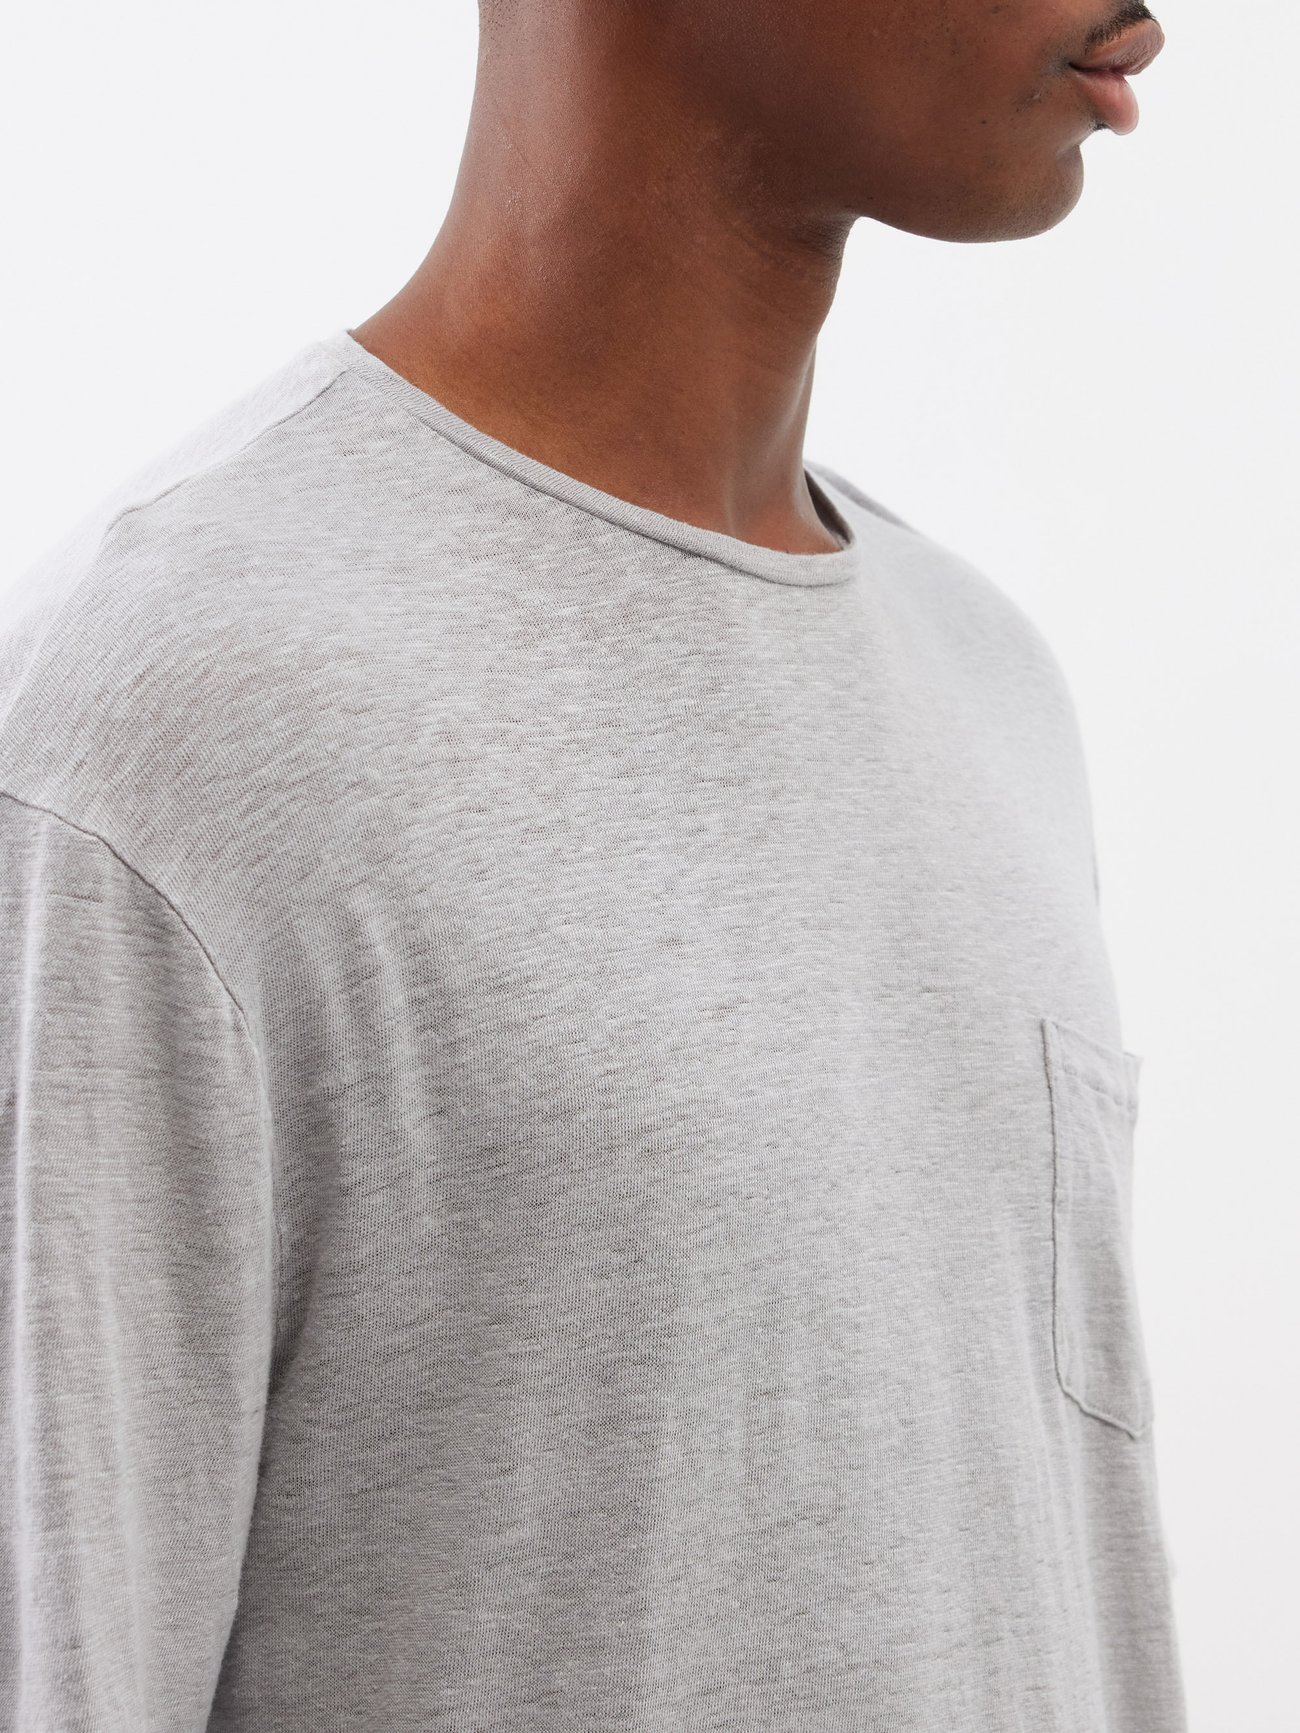 Frescobol Carioca - Carmo Linen T-Shirt Stone Grey M